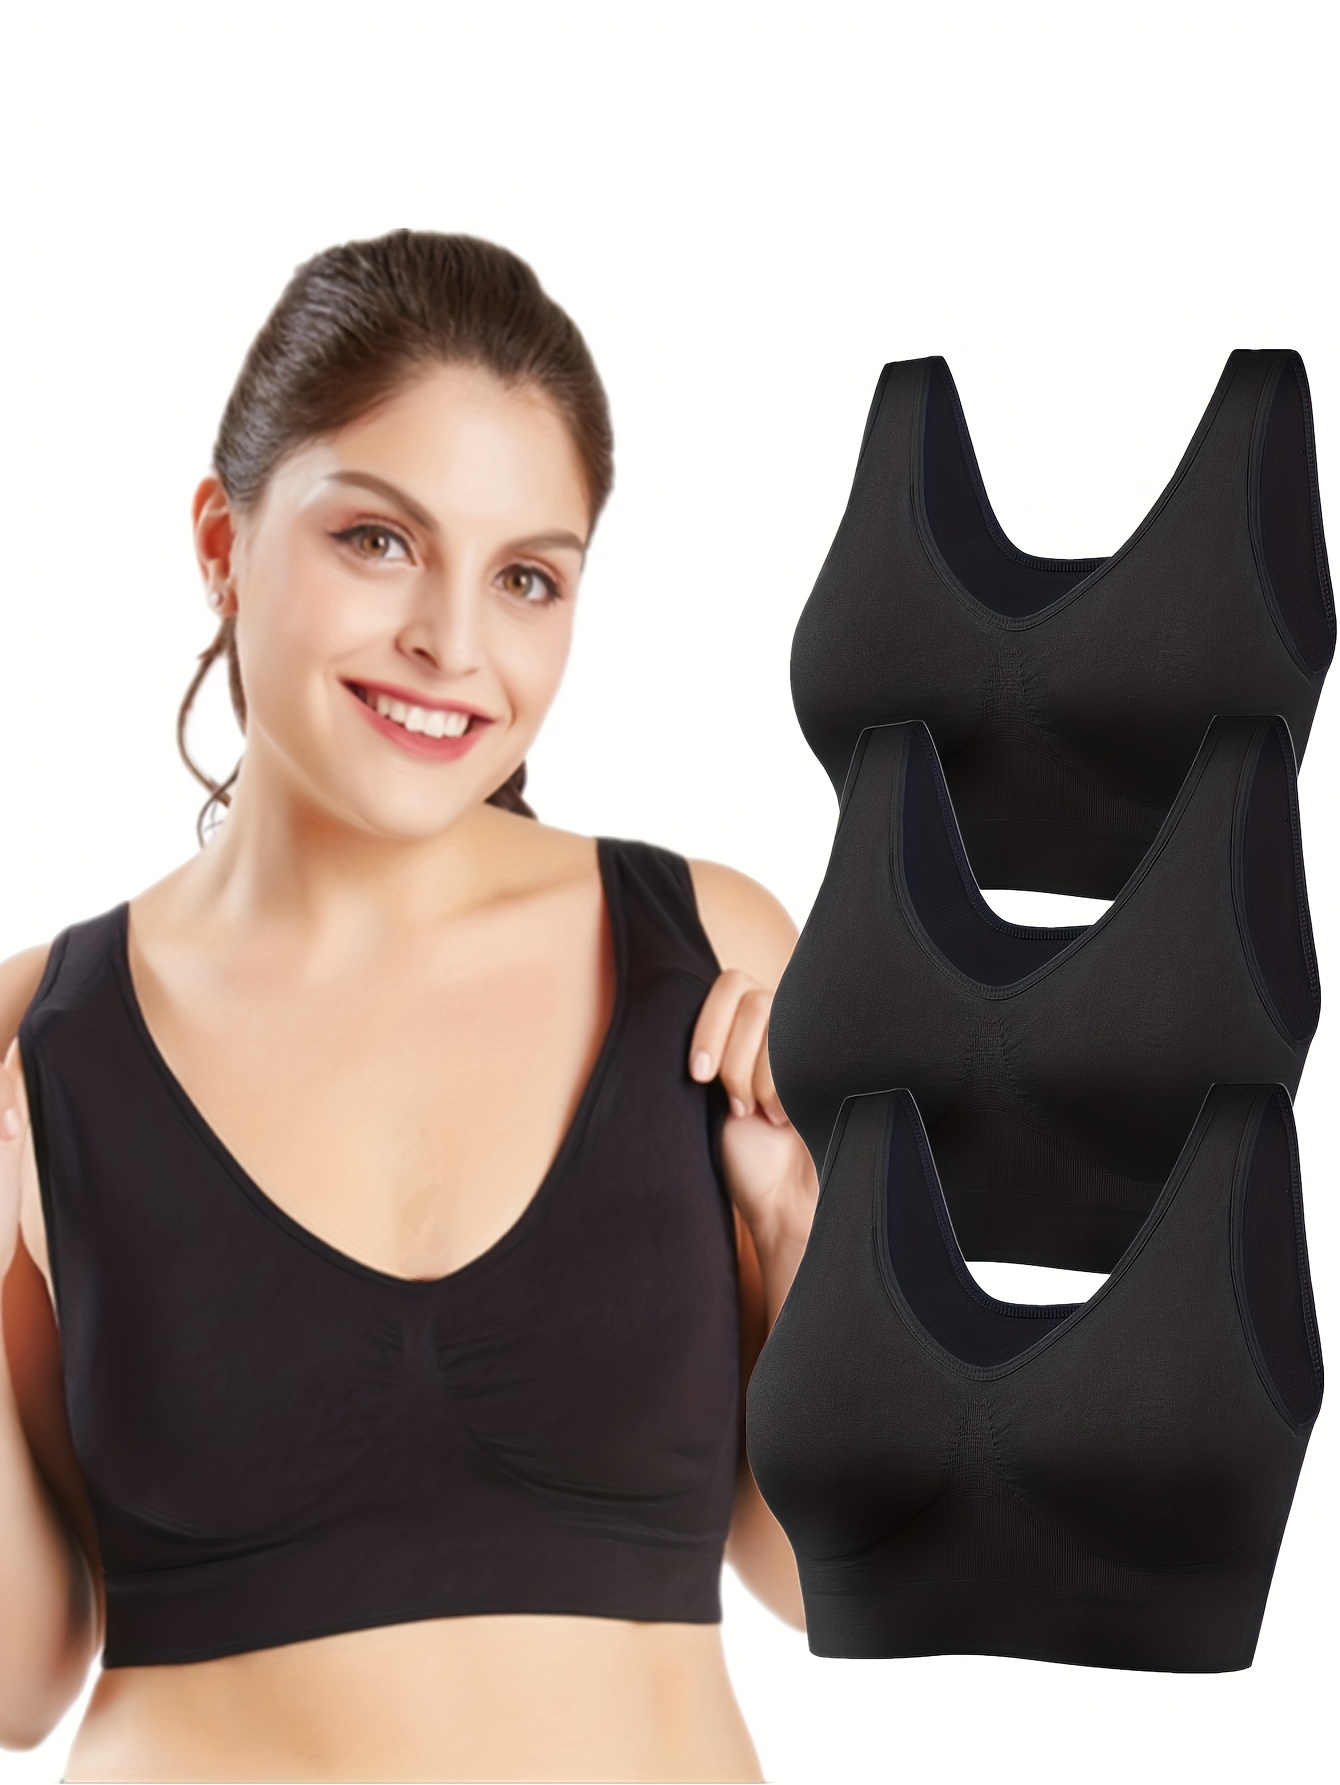  Womens Sports Bras, Yoga Comfort Seamless Stretchy Sports Bra  For Women 3 Pack Black